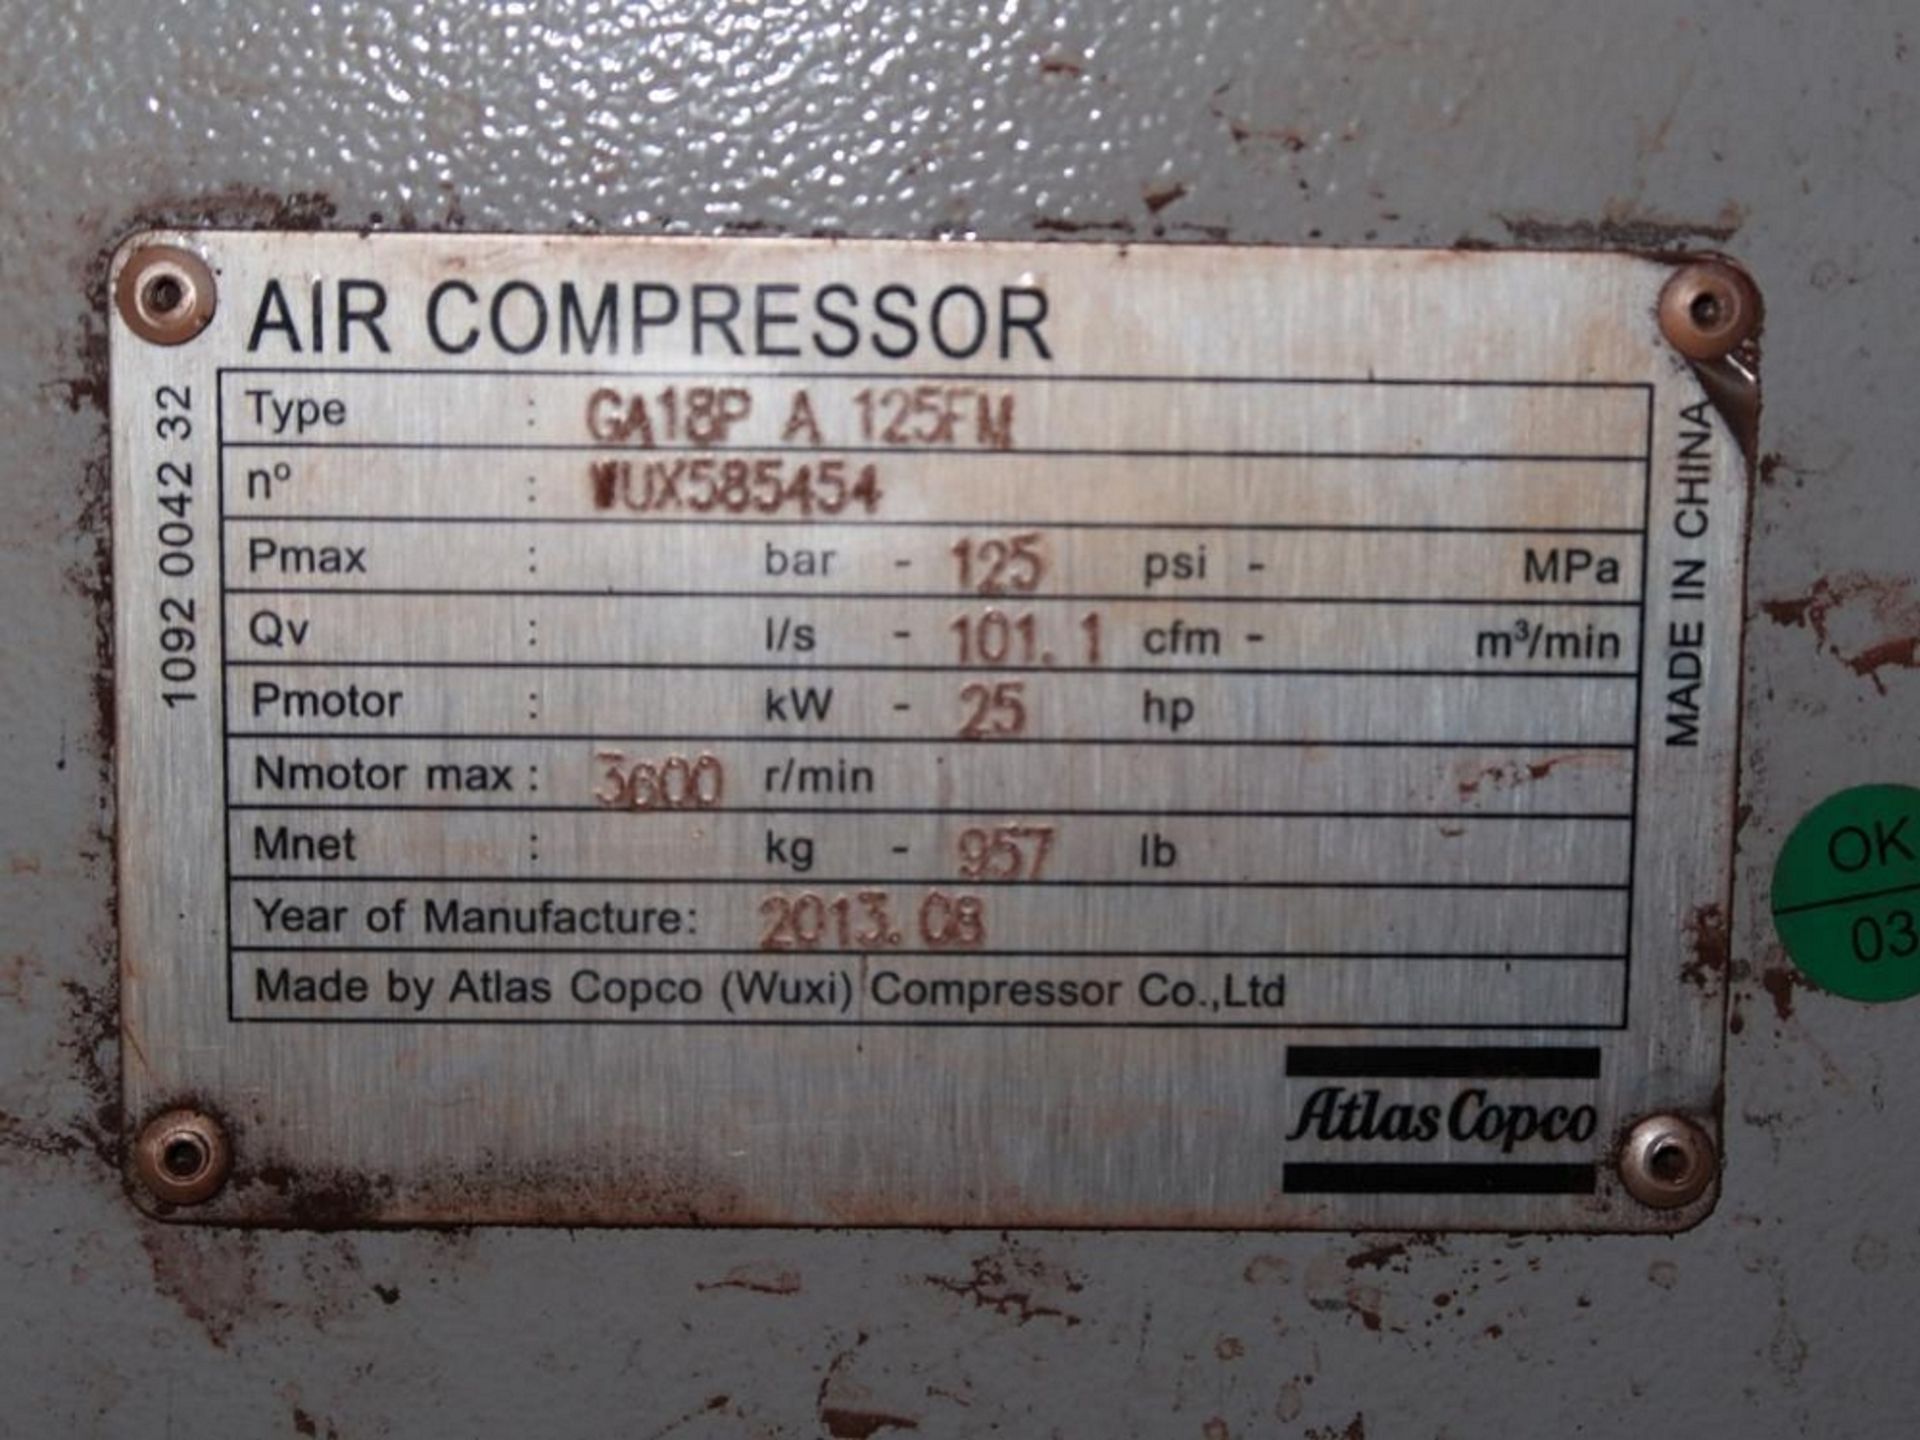 Atlas Copco GA15 Package Air Compressor, S/N WUX585454 (2013), 125 PSI, 20 HP - Bild 2 aus 2